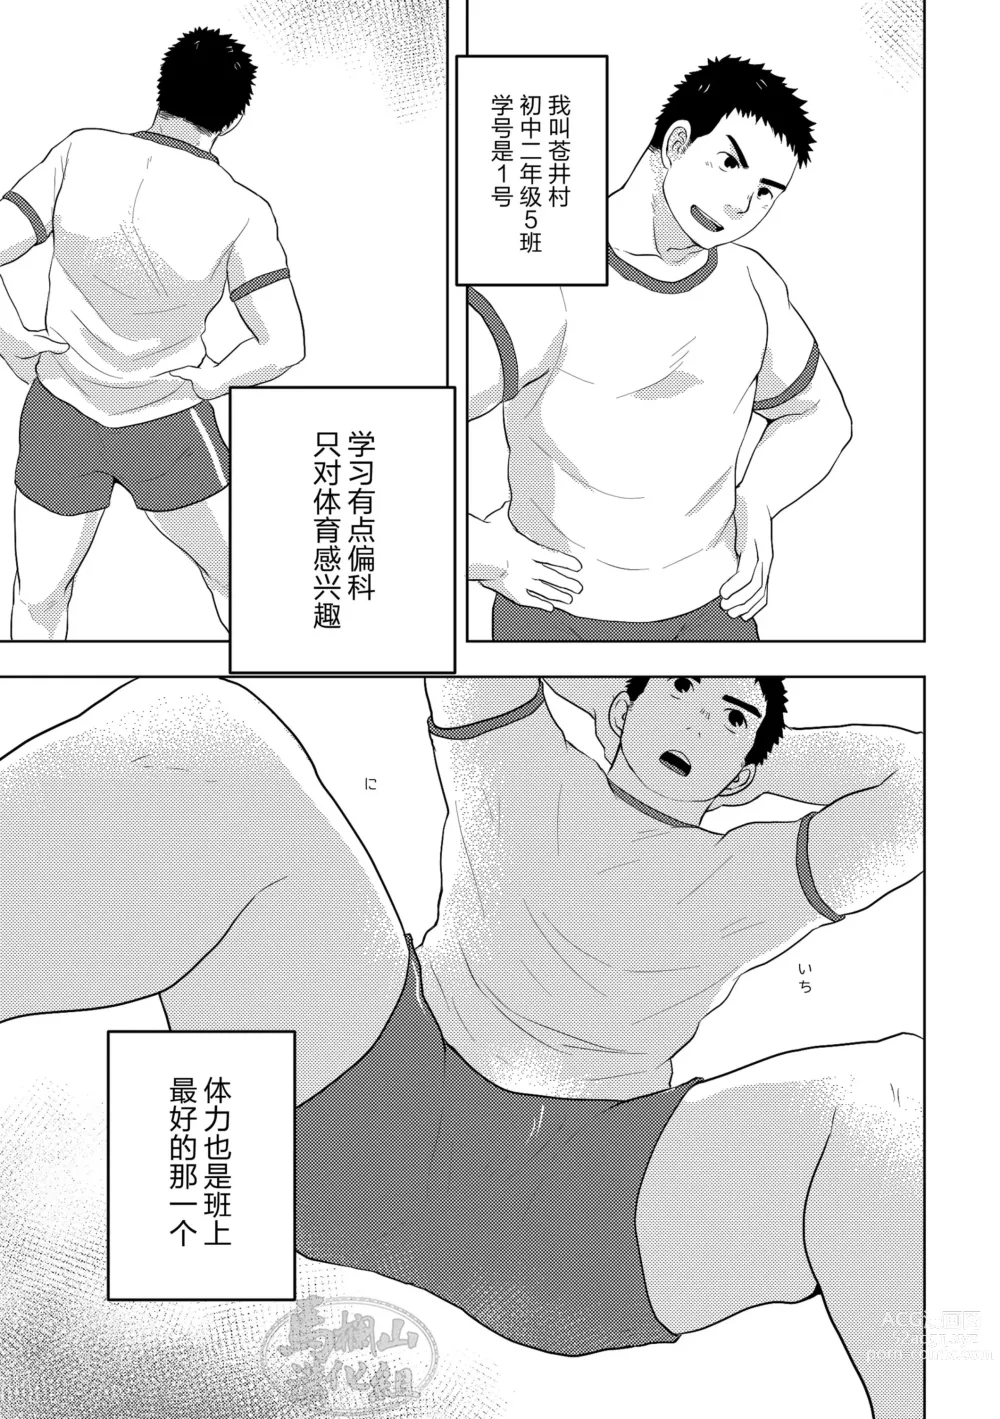 Page 6 of manga 汗だく体育